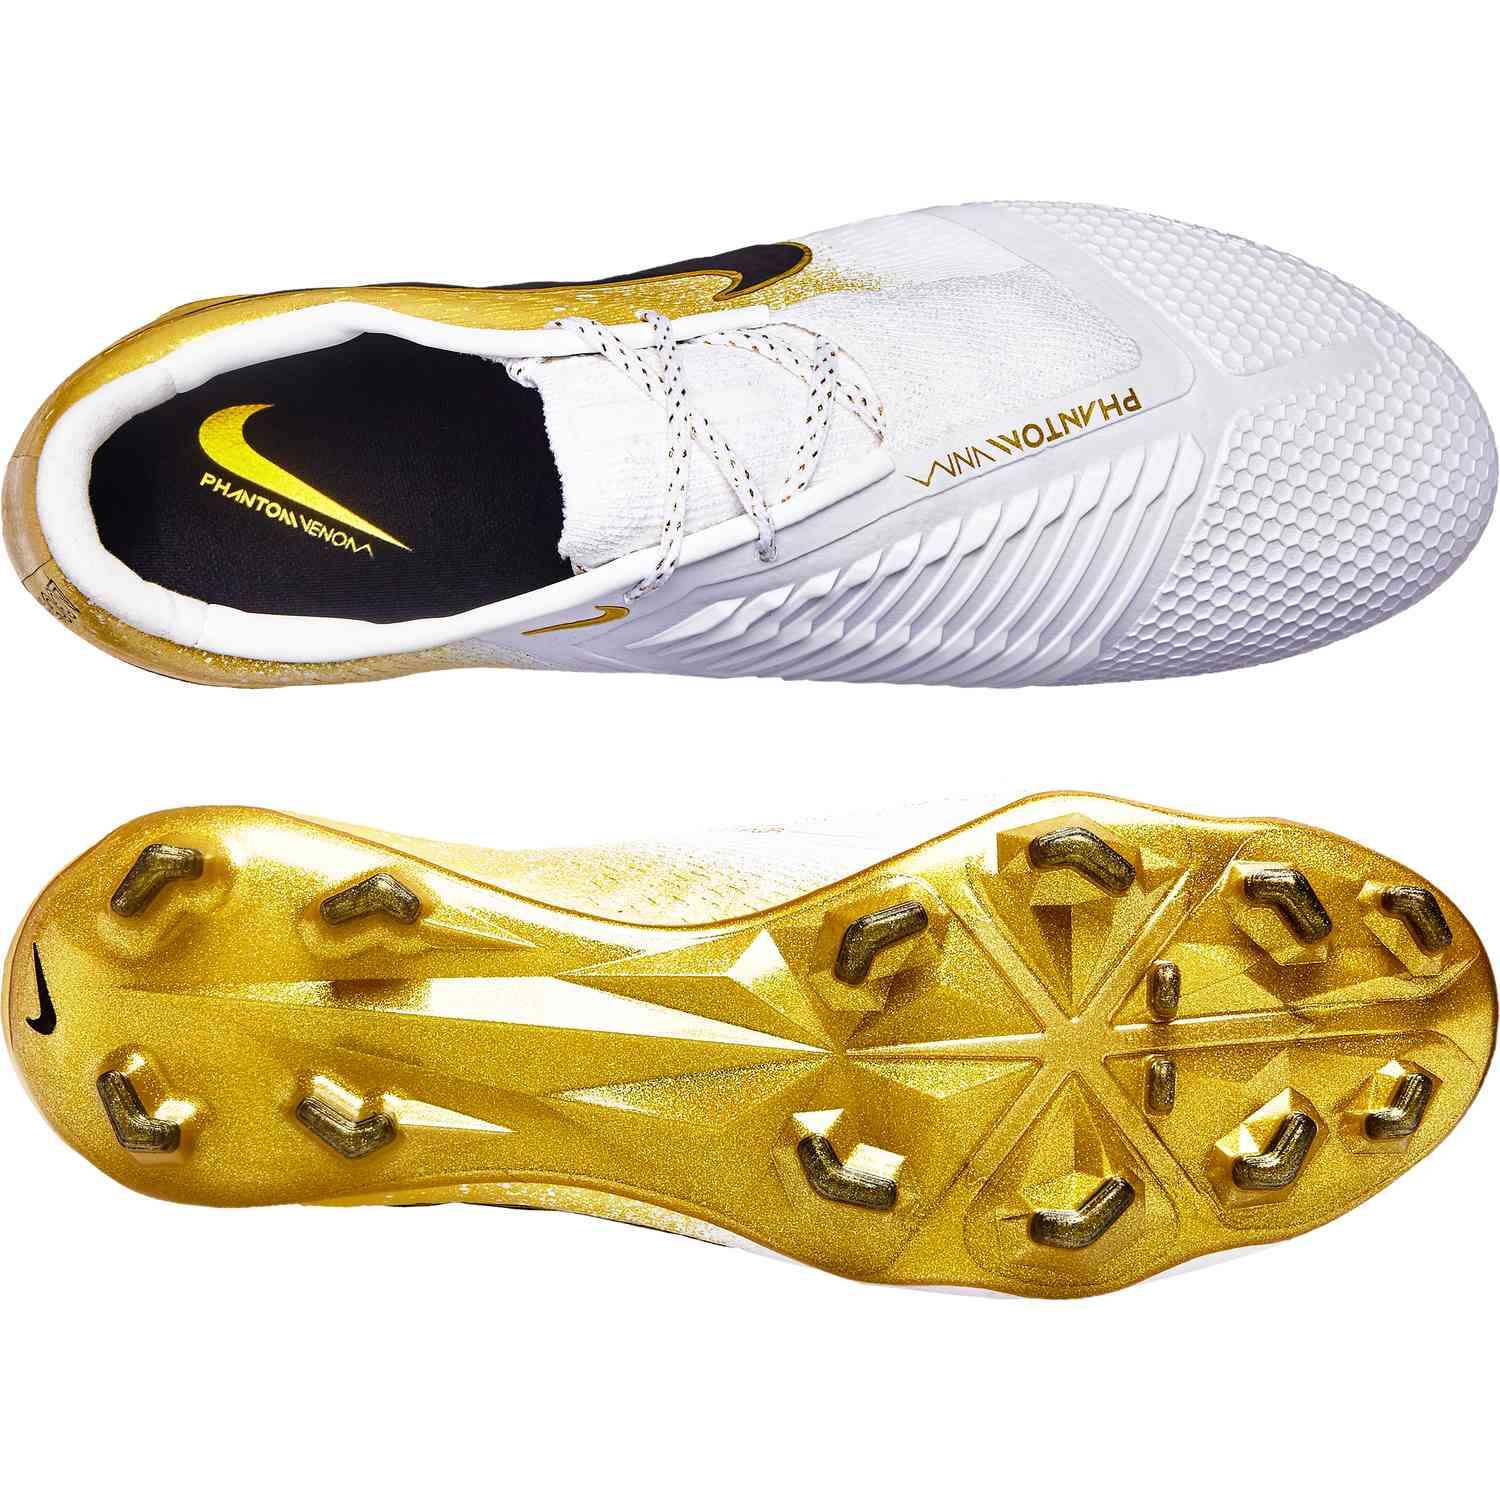 Nike Football Boots Size 8.5 11 Nike Phantom VNM . eBay